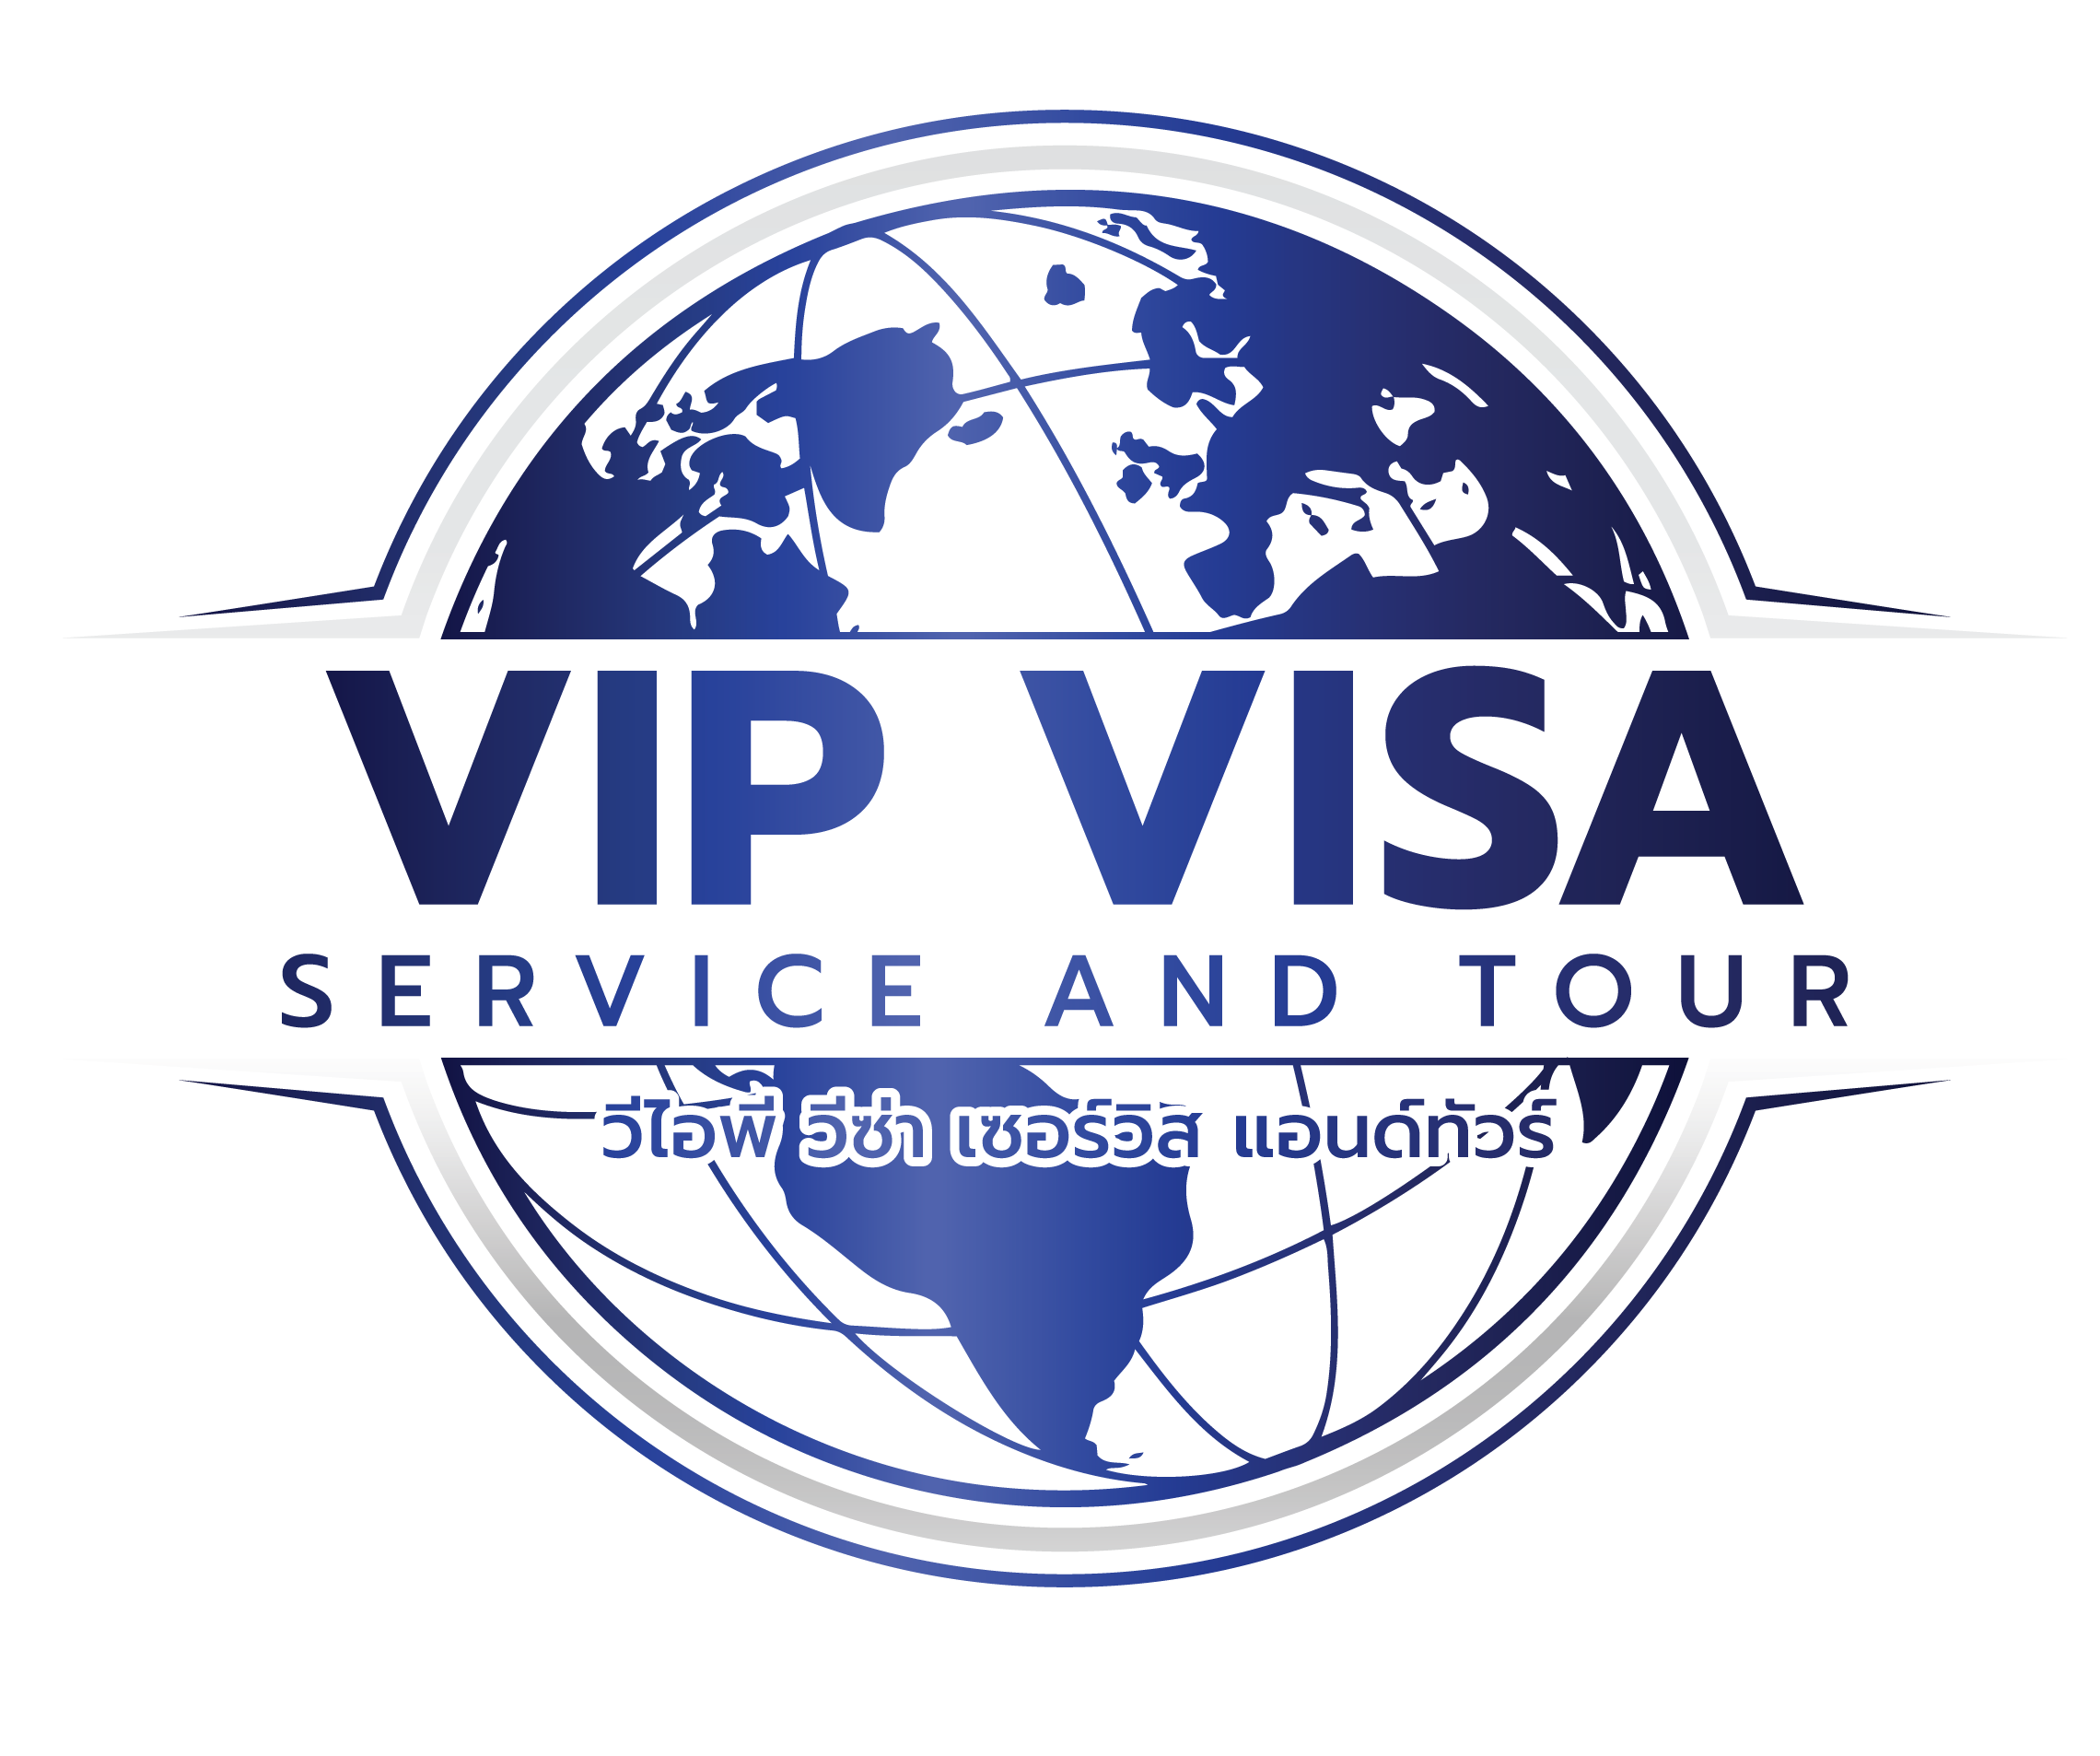 VIP VISA SERVICE AND TOUR